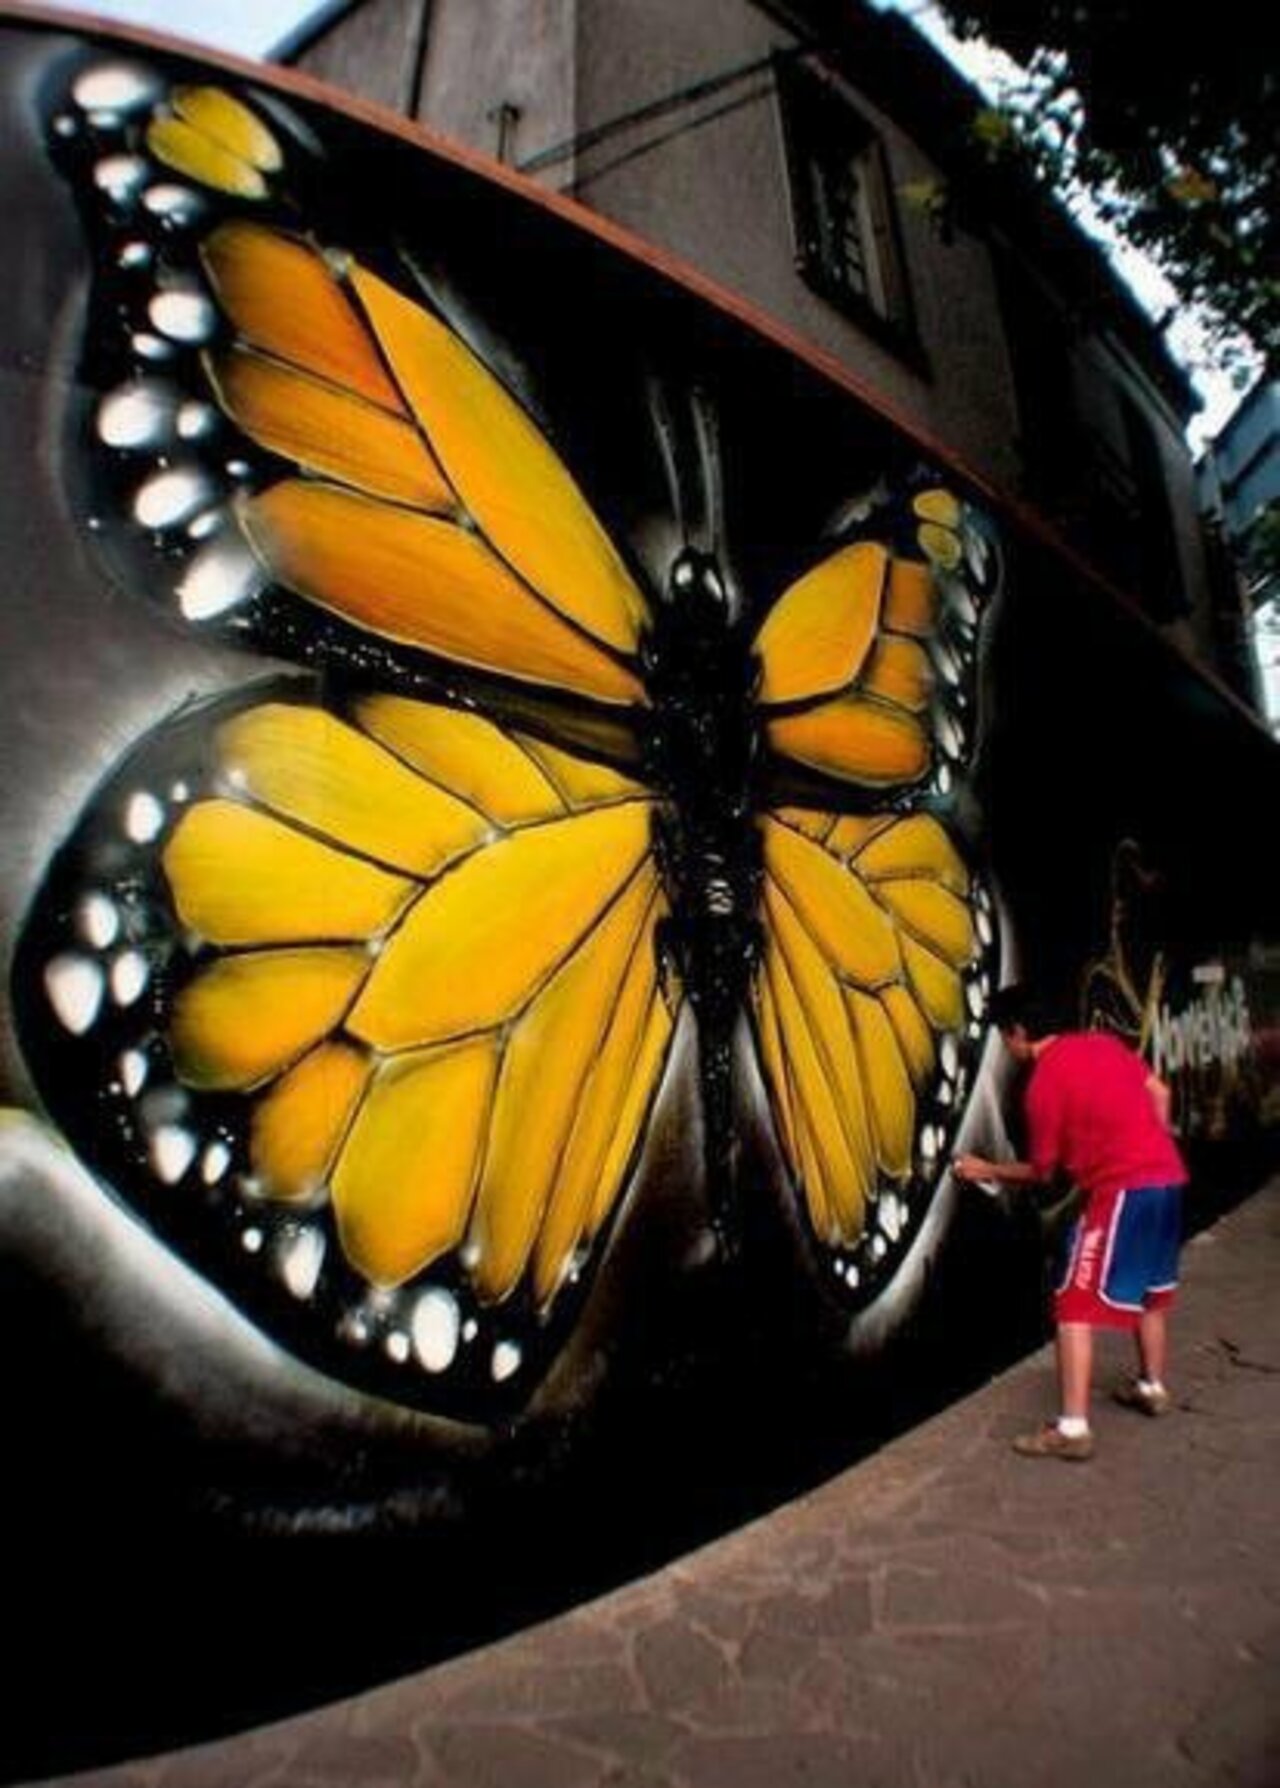 RT @AuKeats: #butterfly #streetart by #FabioLopes #Brazil #switch #graffiti #bedifferent #art #arte https://t.co/mnHlZx1K6h